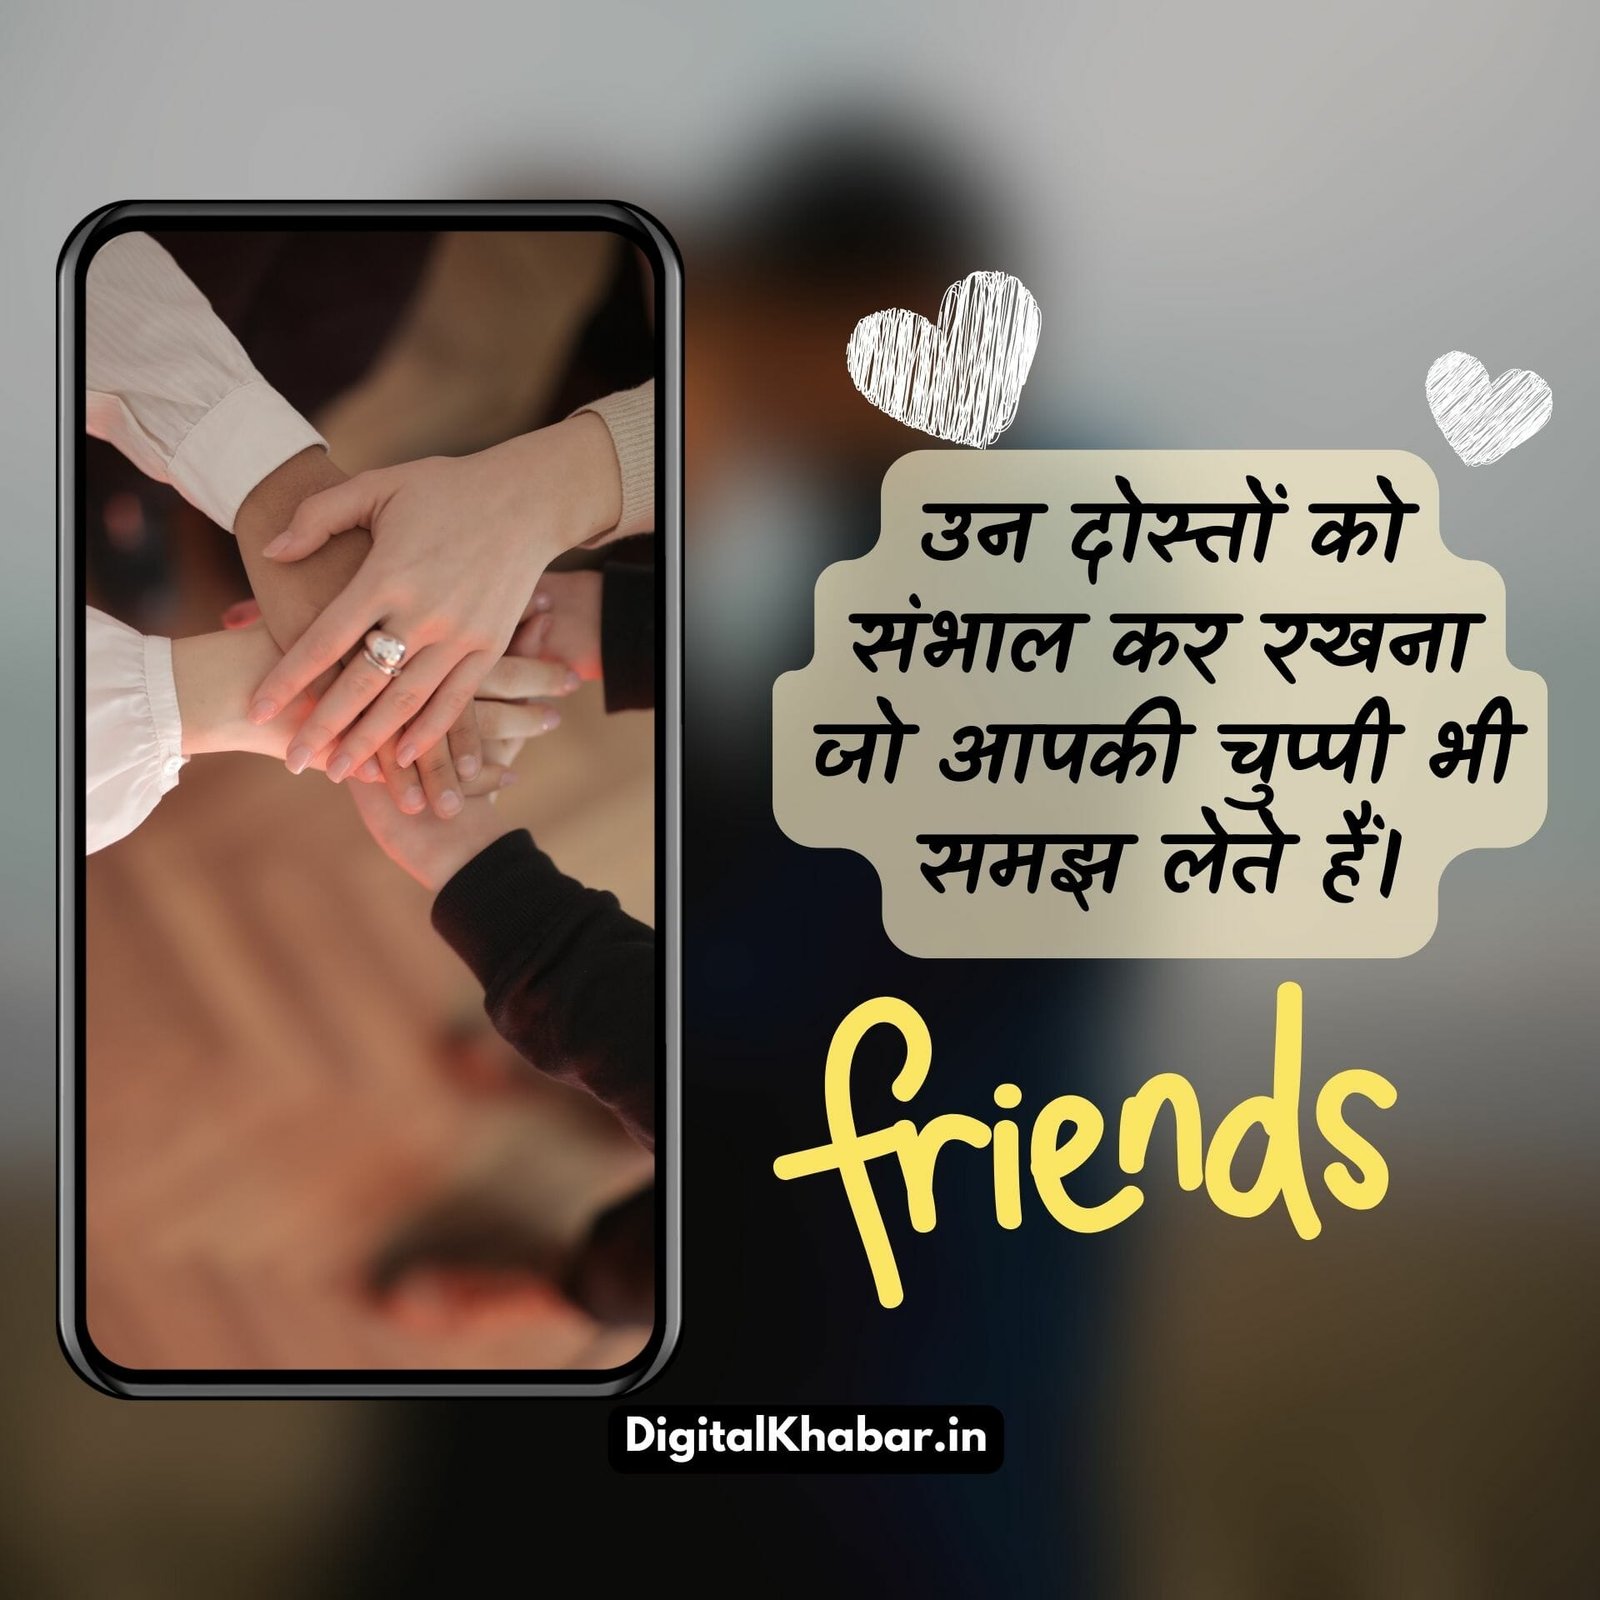 Broken friendship quotes in hindi